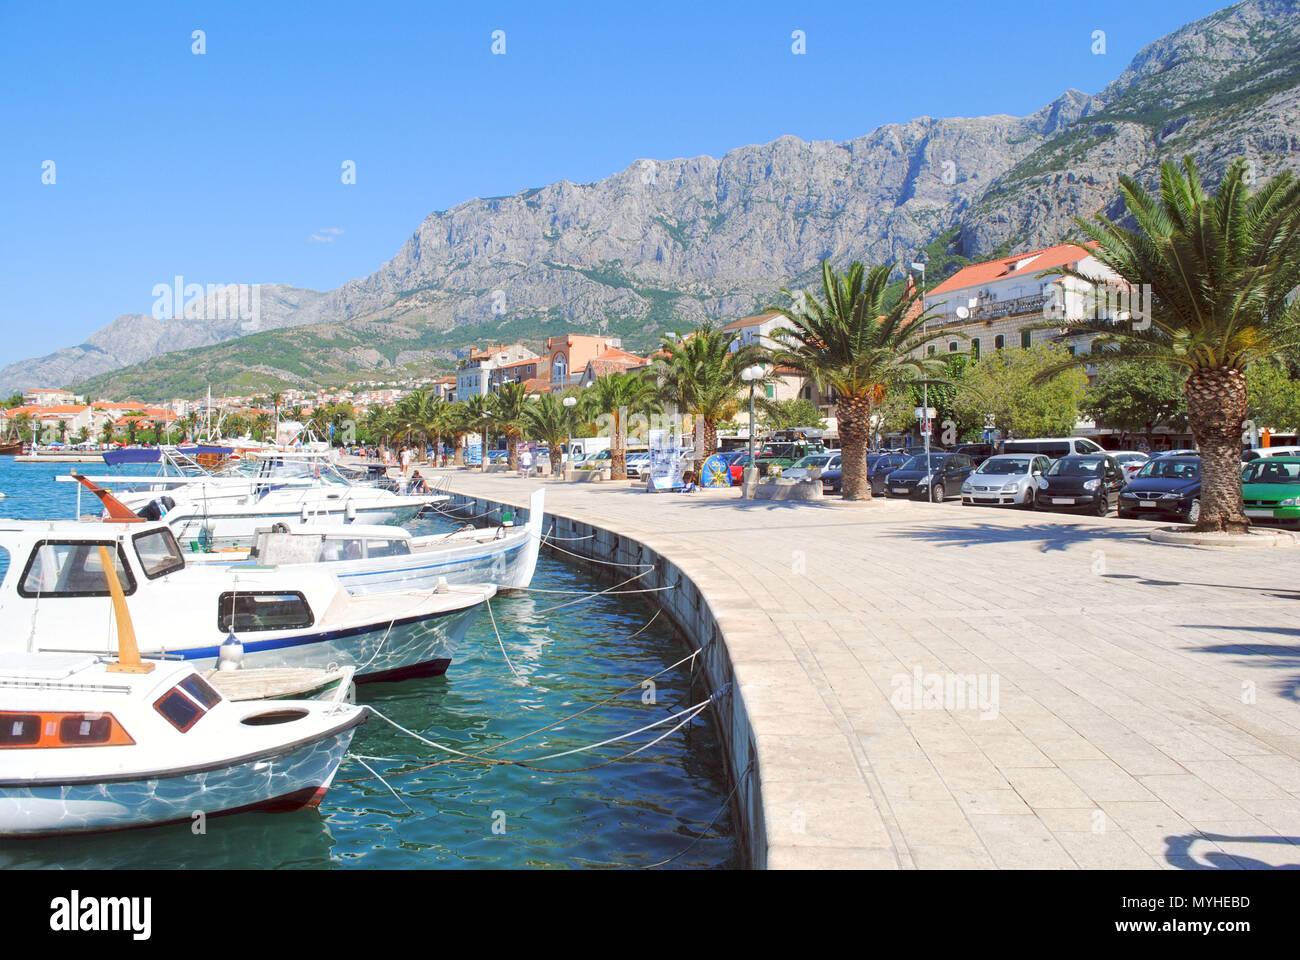 The picturesque Croatian coastal town of Makarska, Croatia. Stock Photo